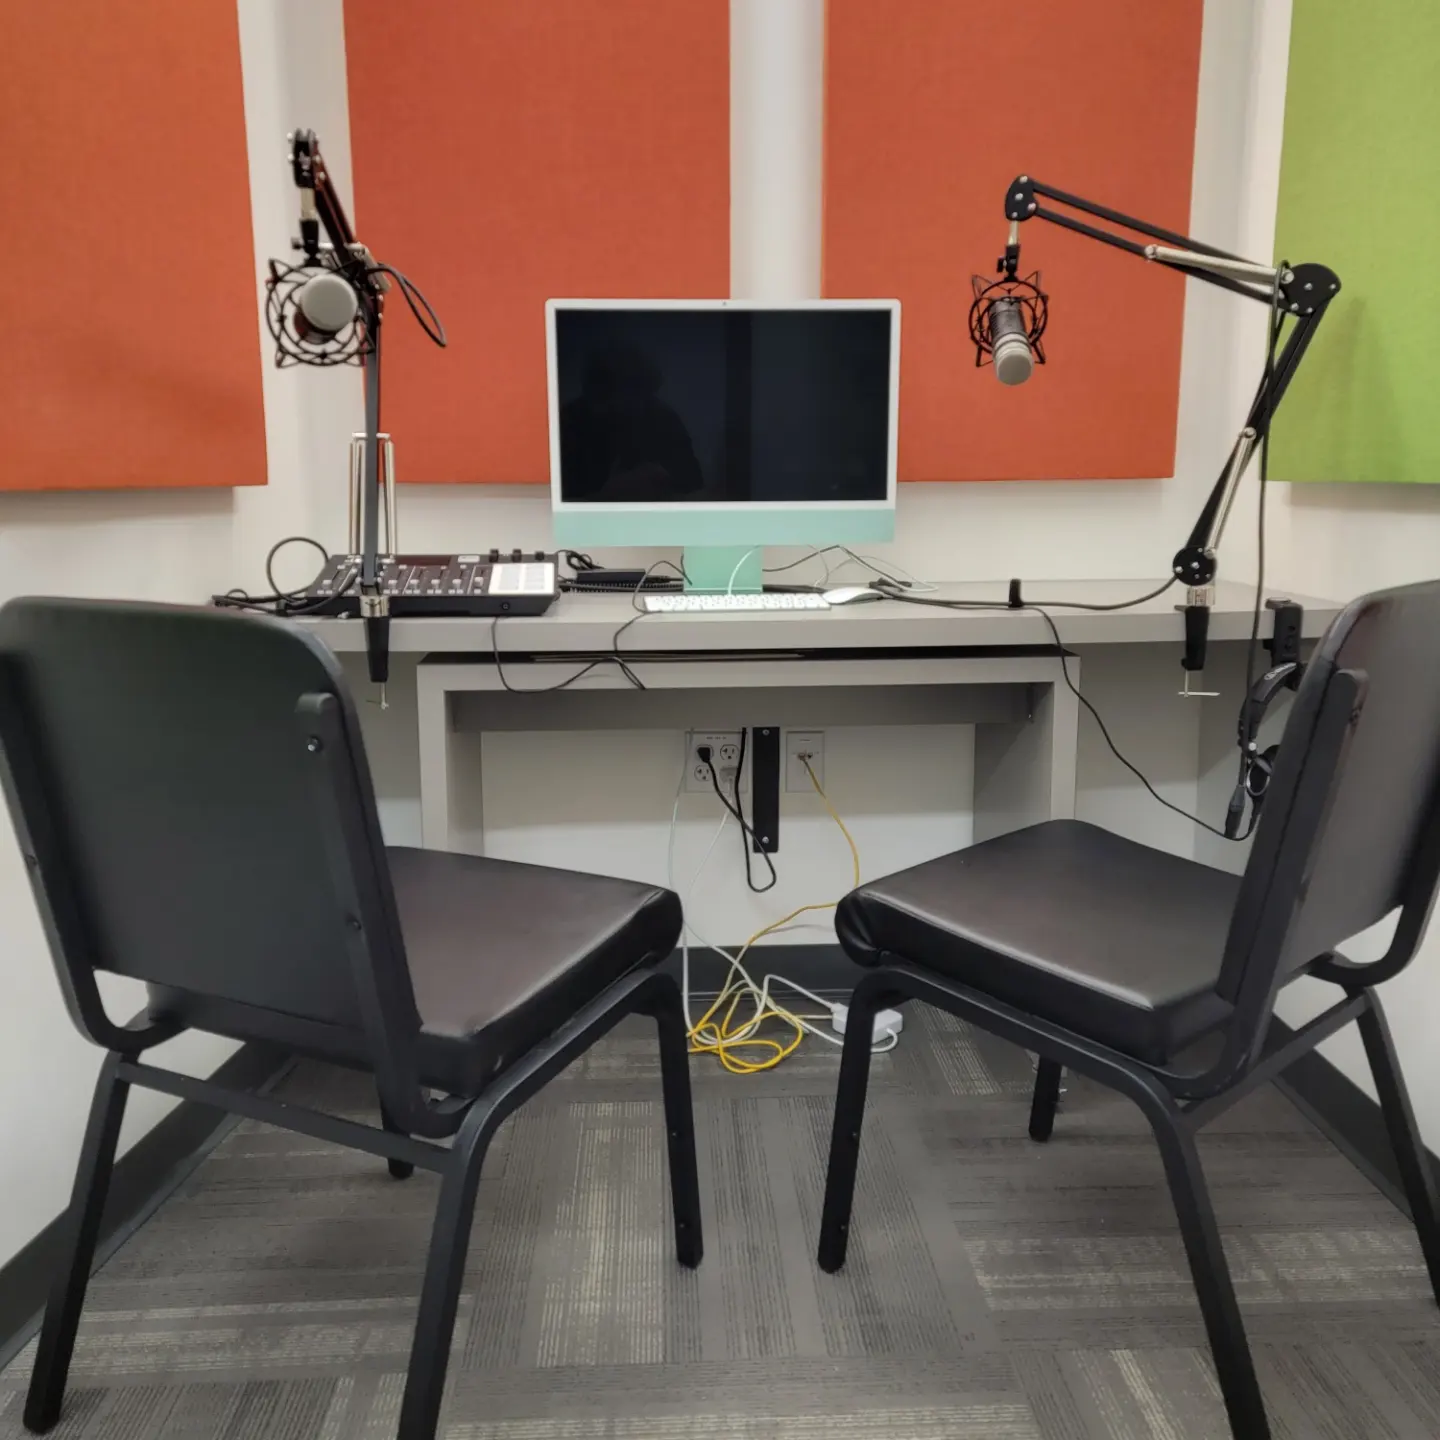 The c4c podcast studio